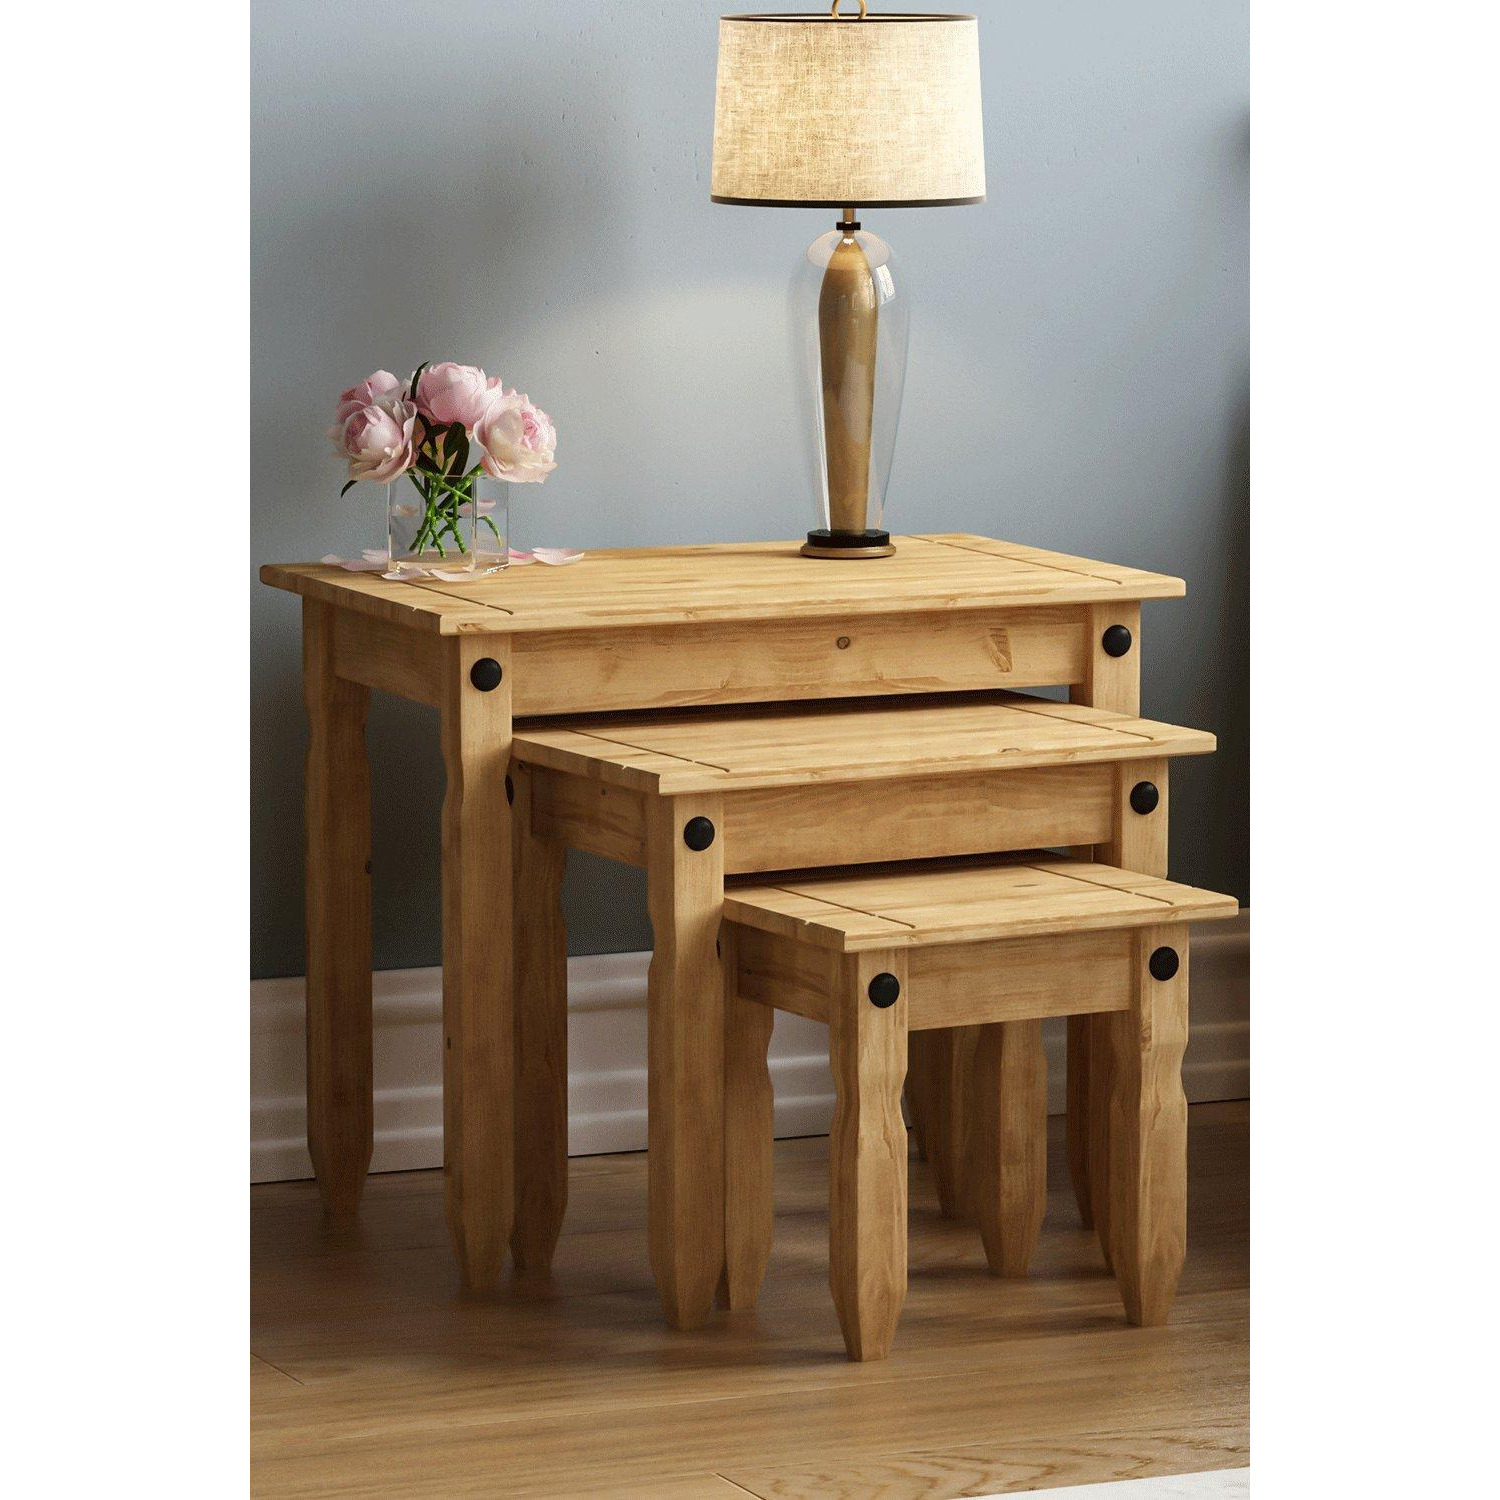 Vida Designs Corona Nest Of Tables Set of 3 Storage Living Room Furniture - image 1